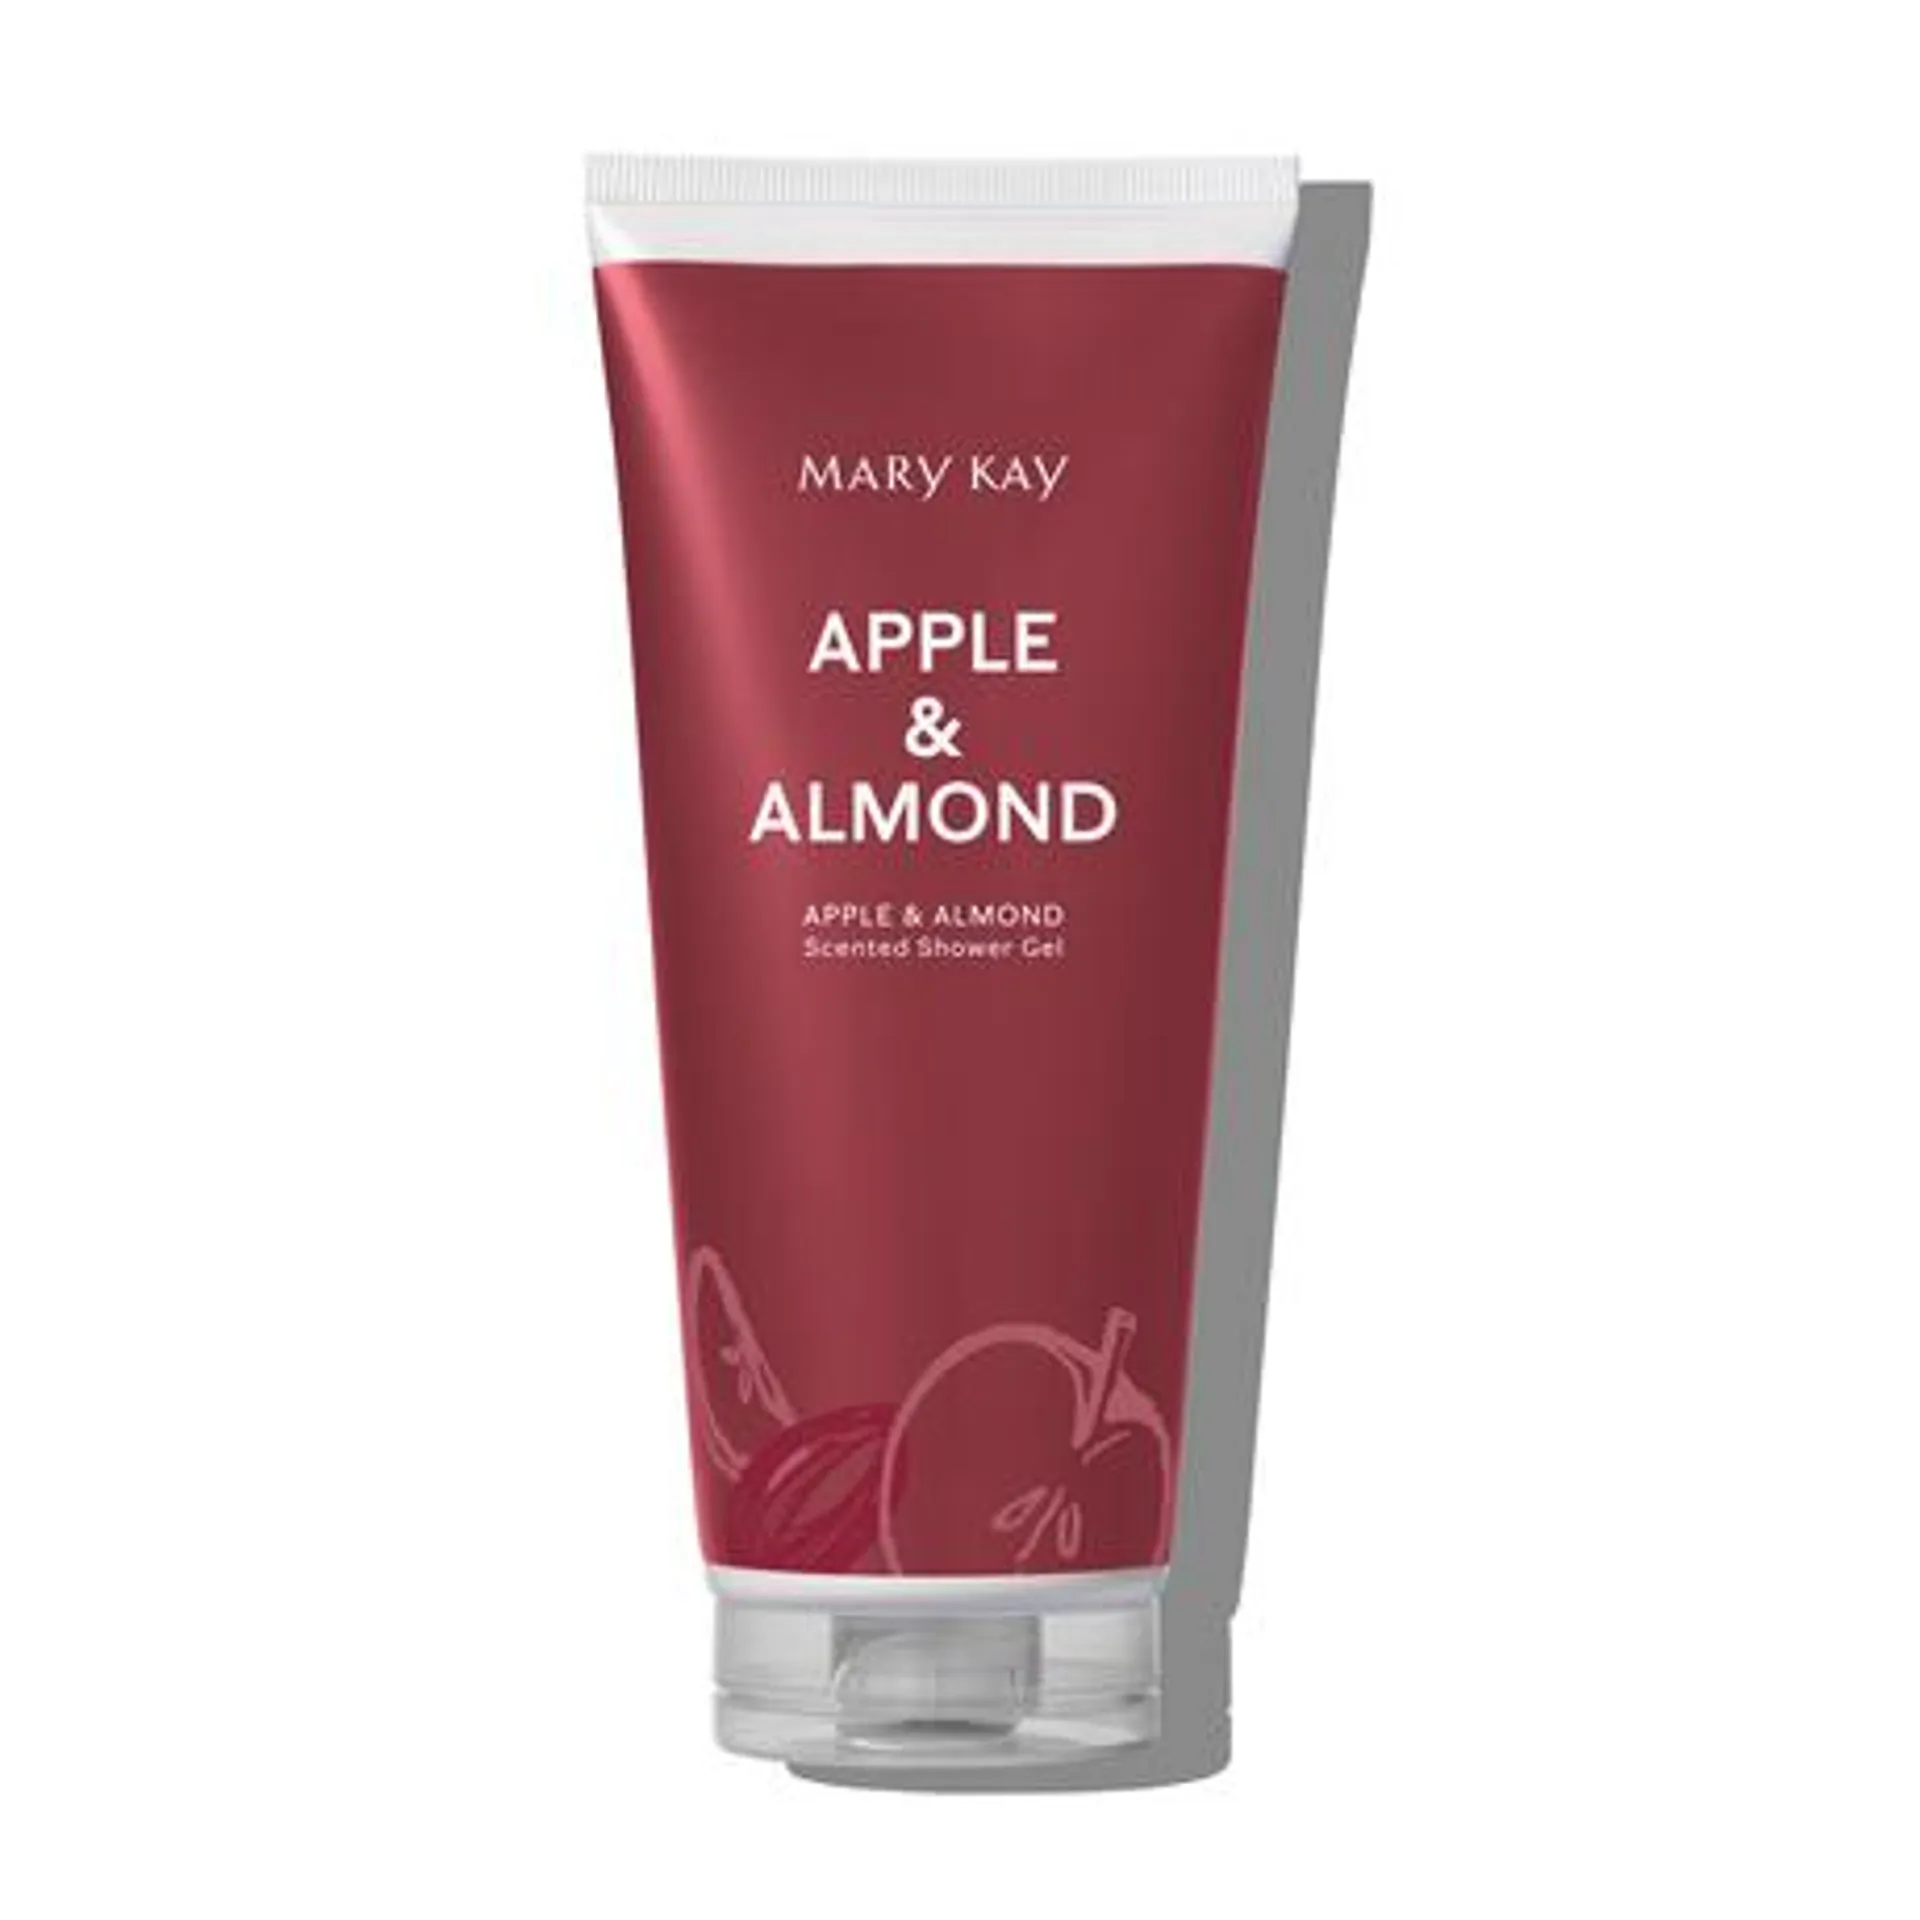 Gel para Ducha con Aroma Mary Kay® Apple & Almond